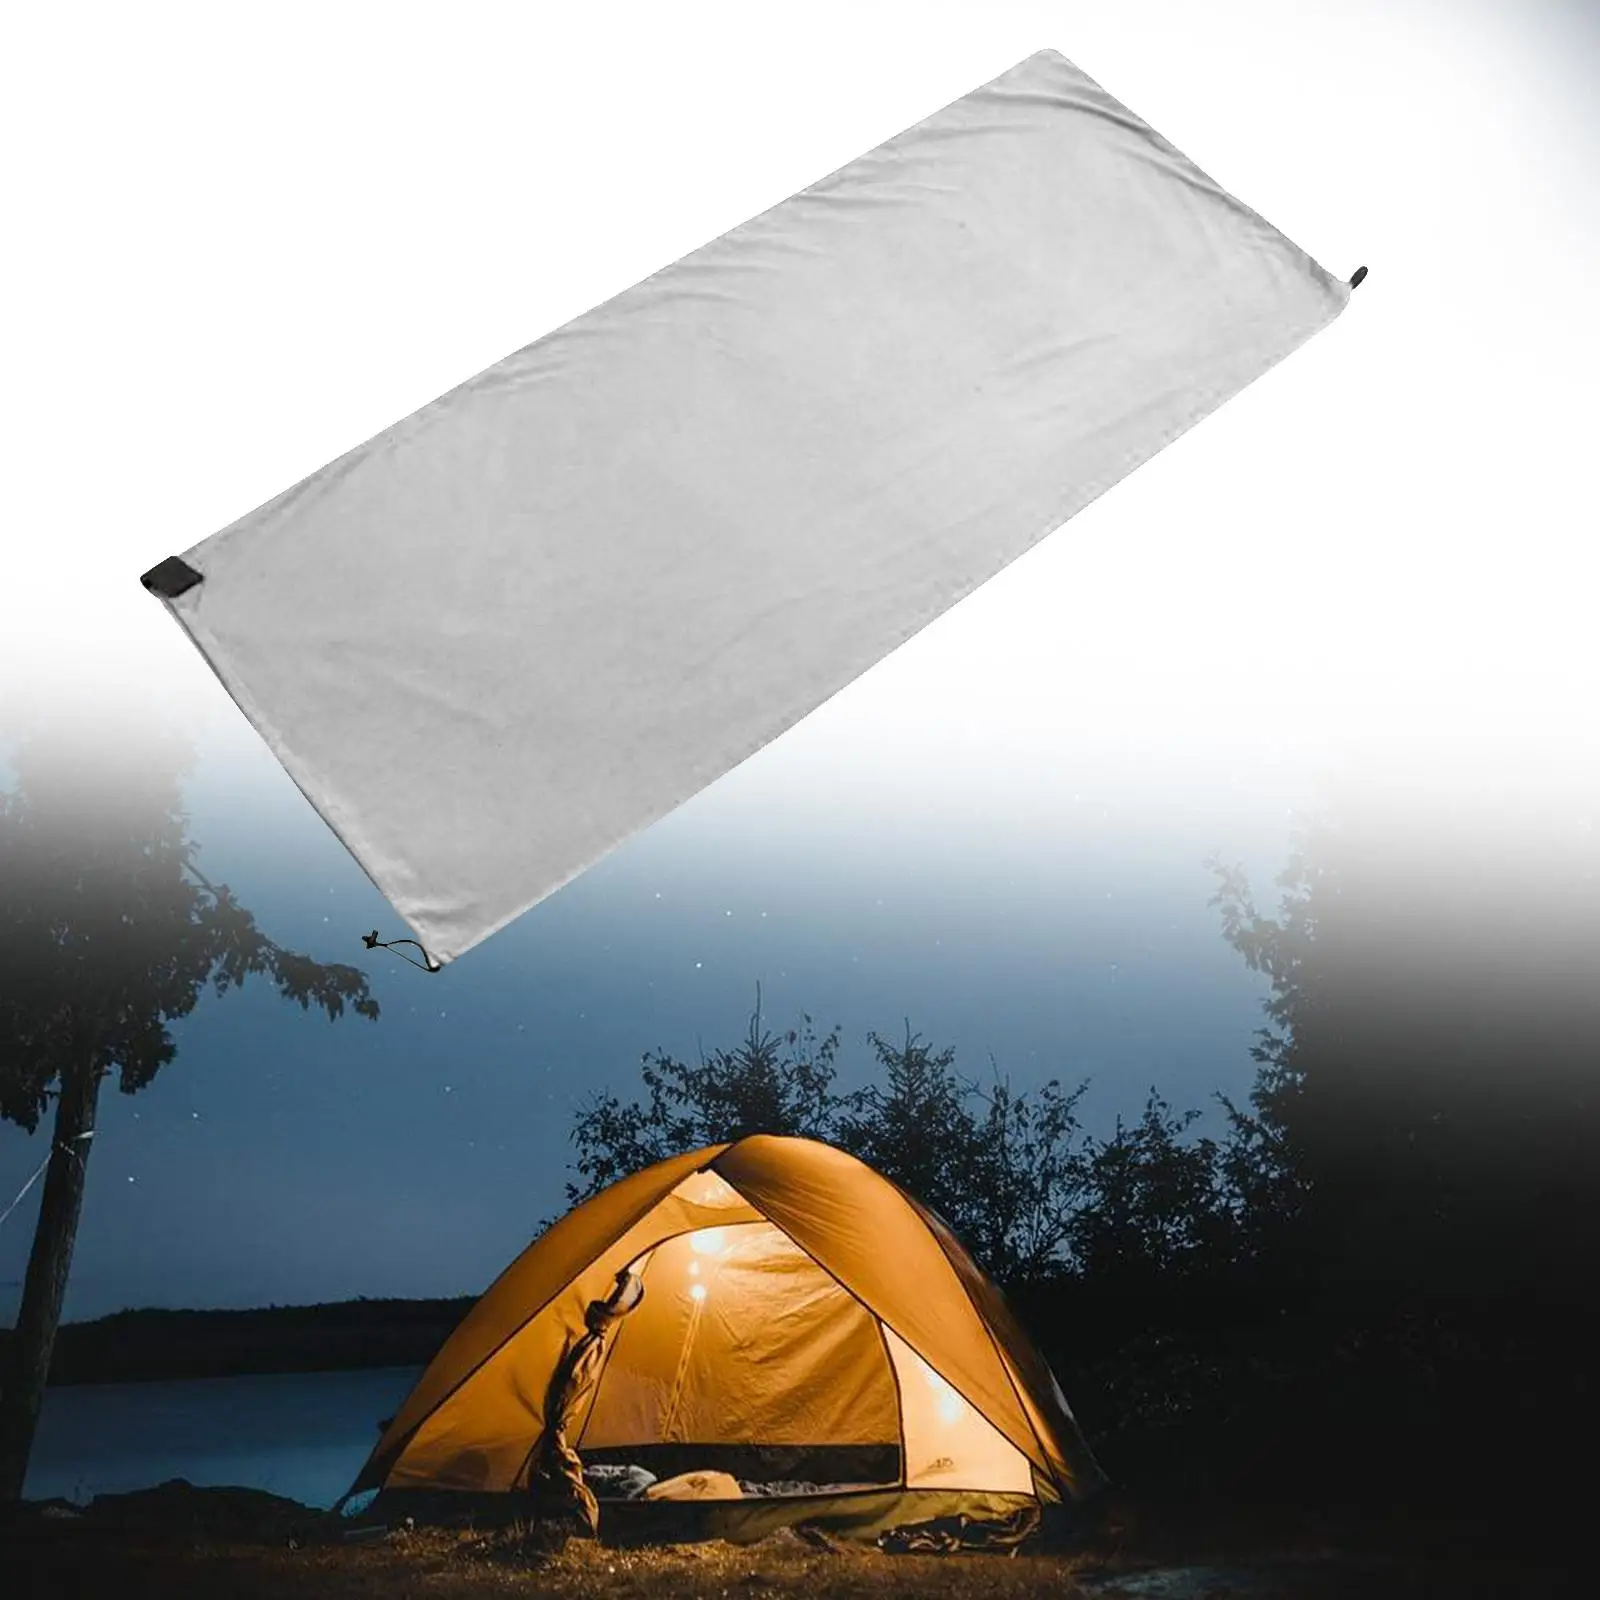 Sleeping Bag Liner Sleep Sheet Camping Blanket Multifunctional Portable